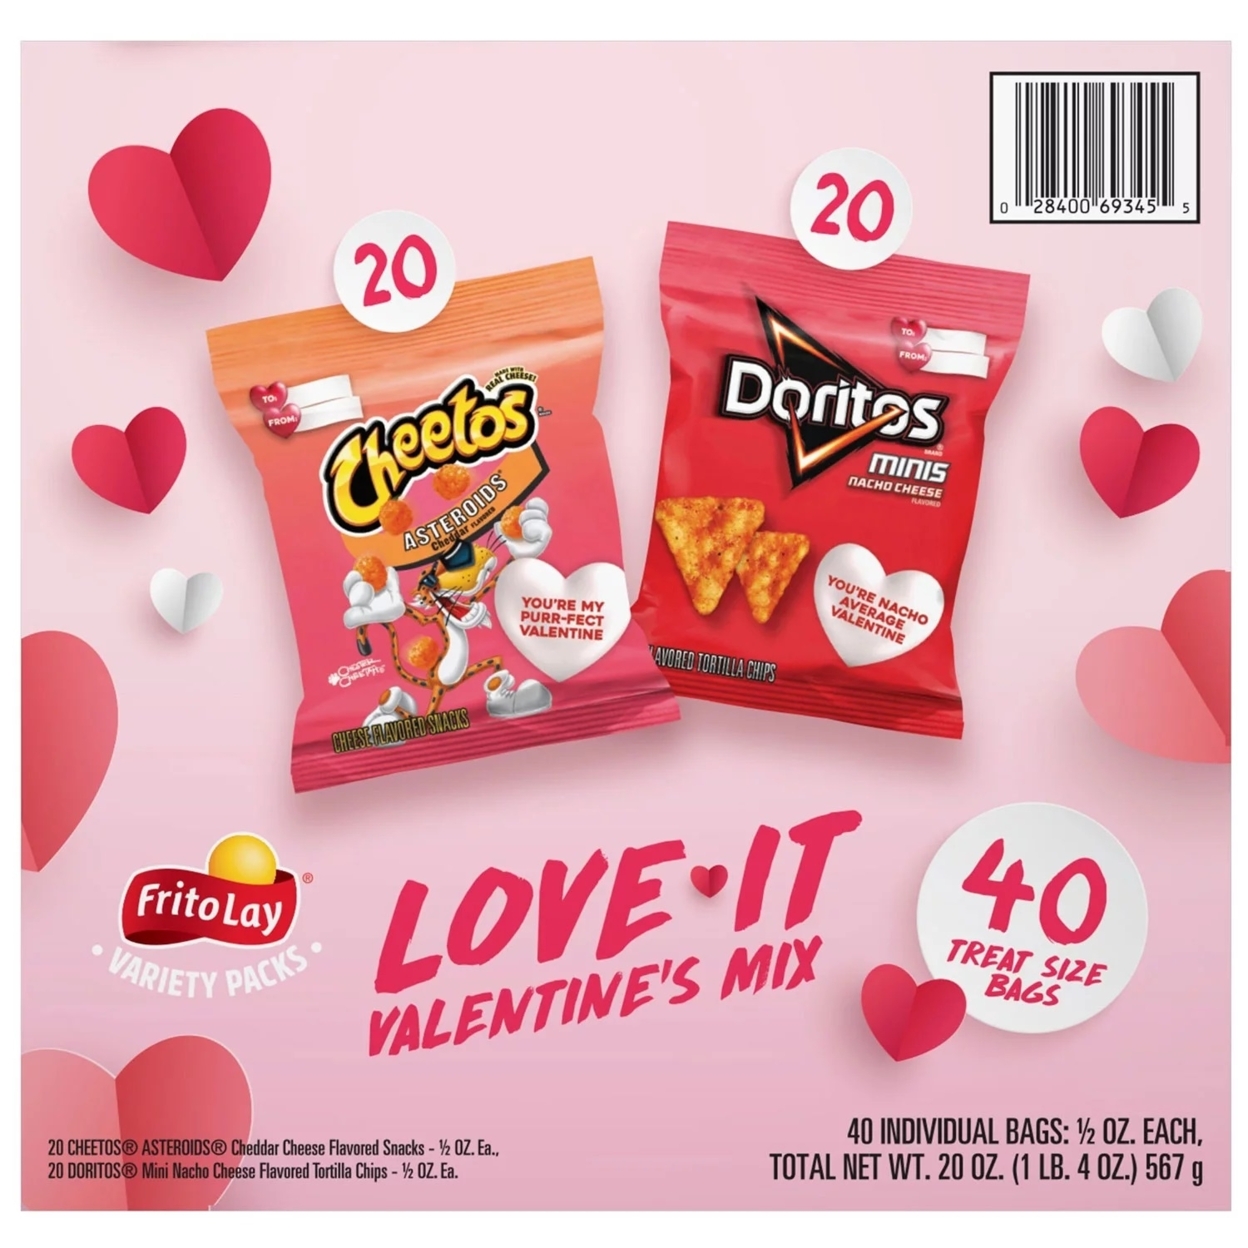 Frito Lay Cheetos & Doritos Valentine's Mix (40 Count)